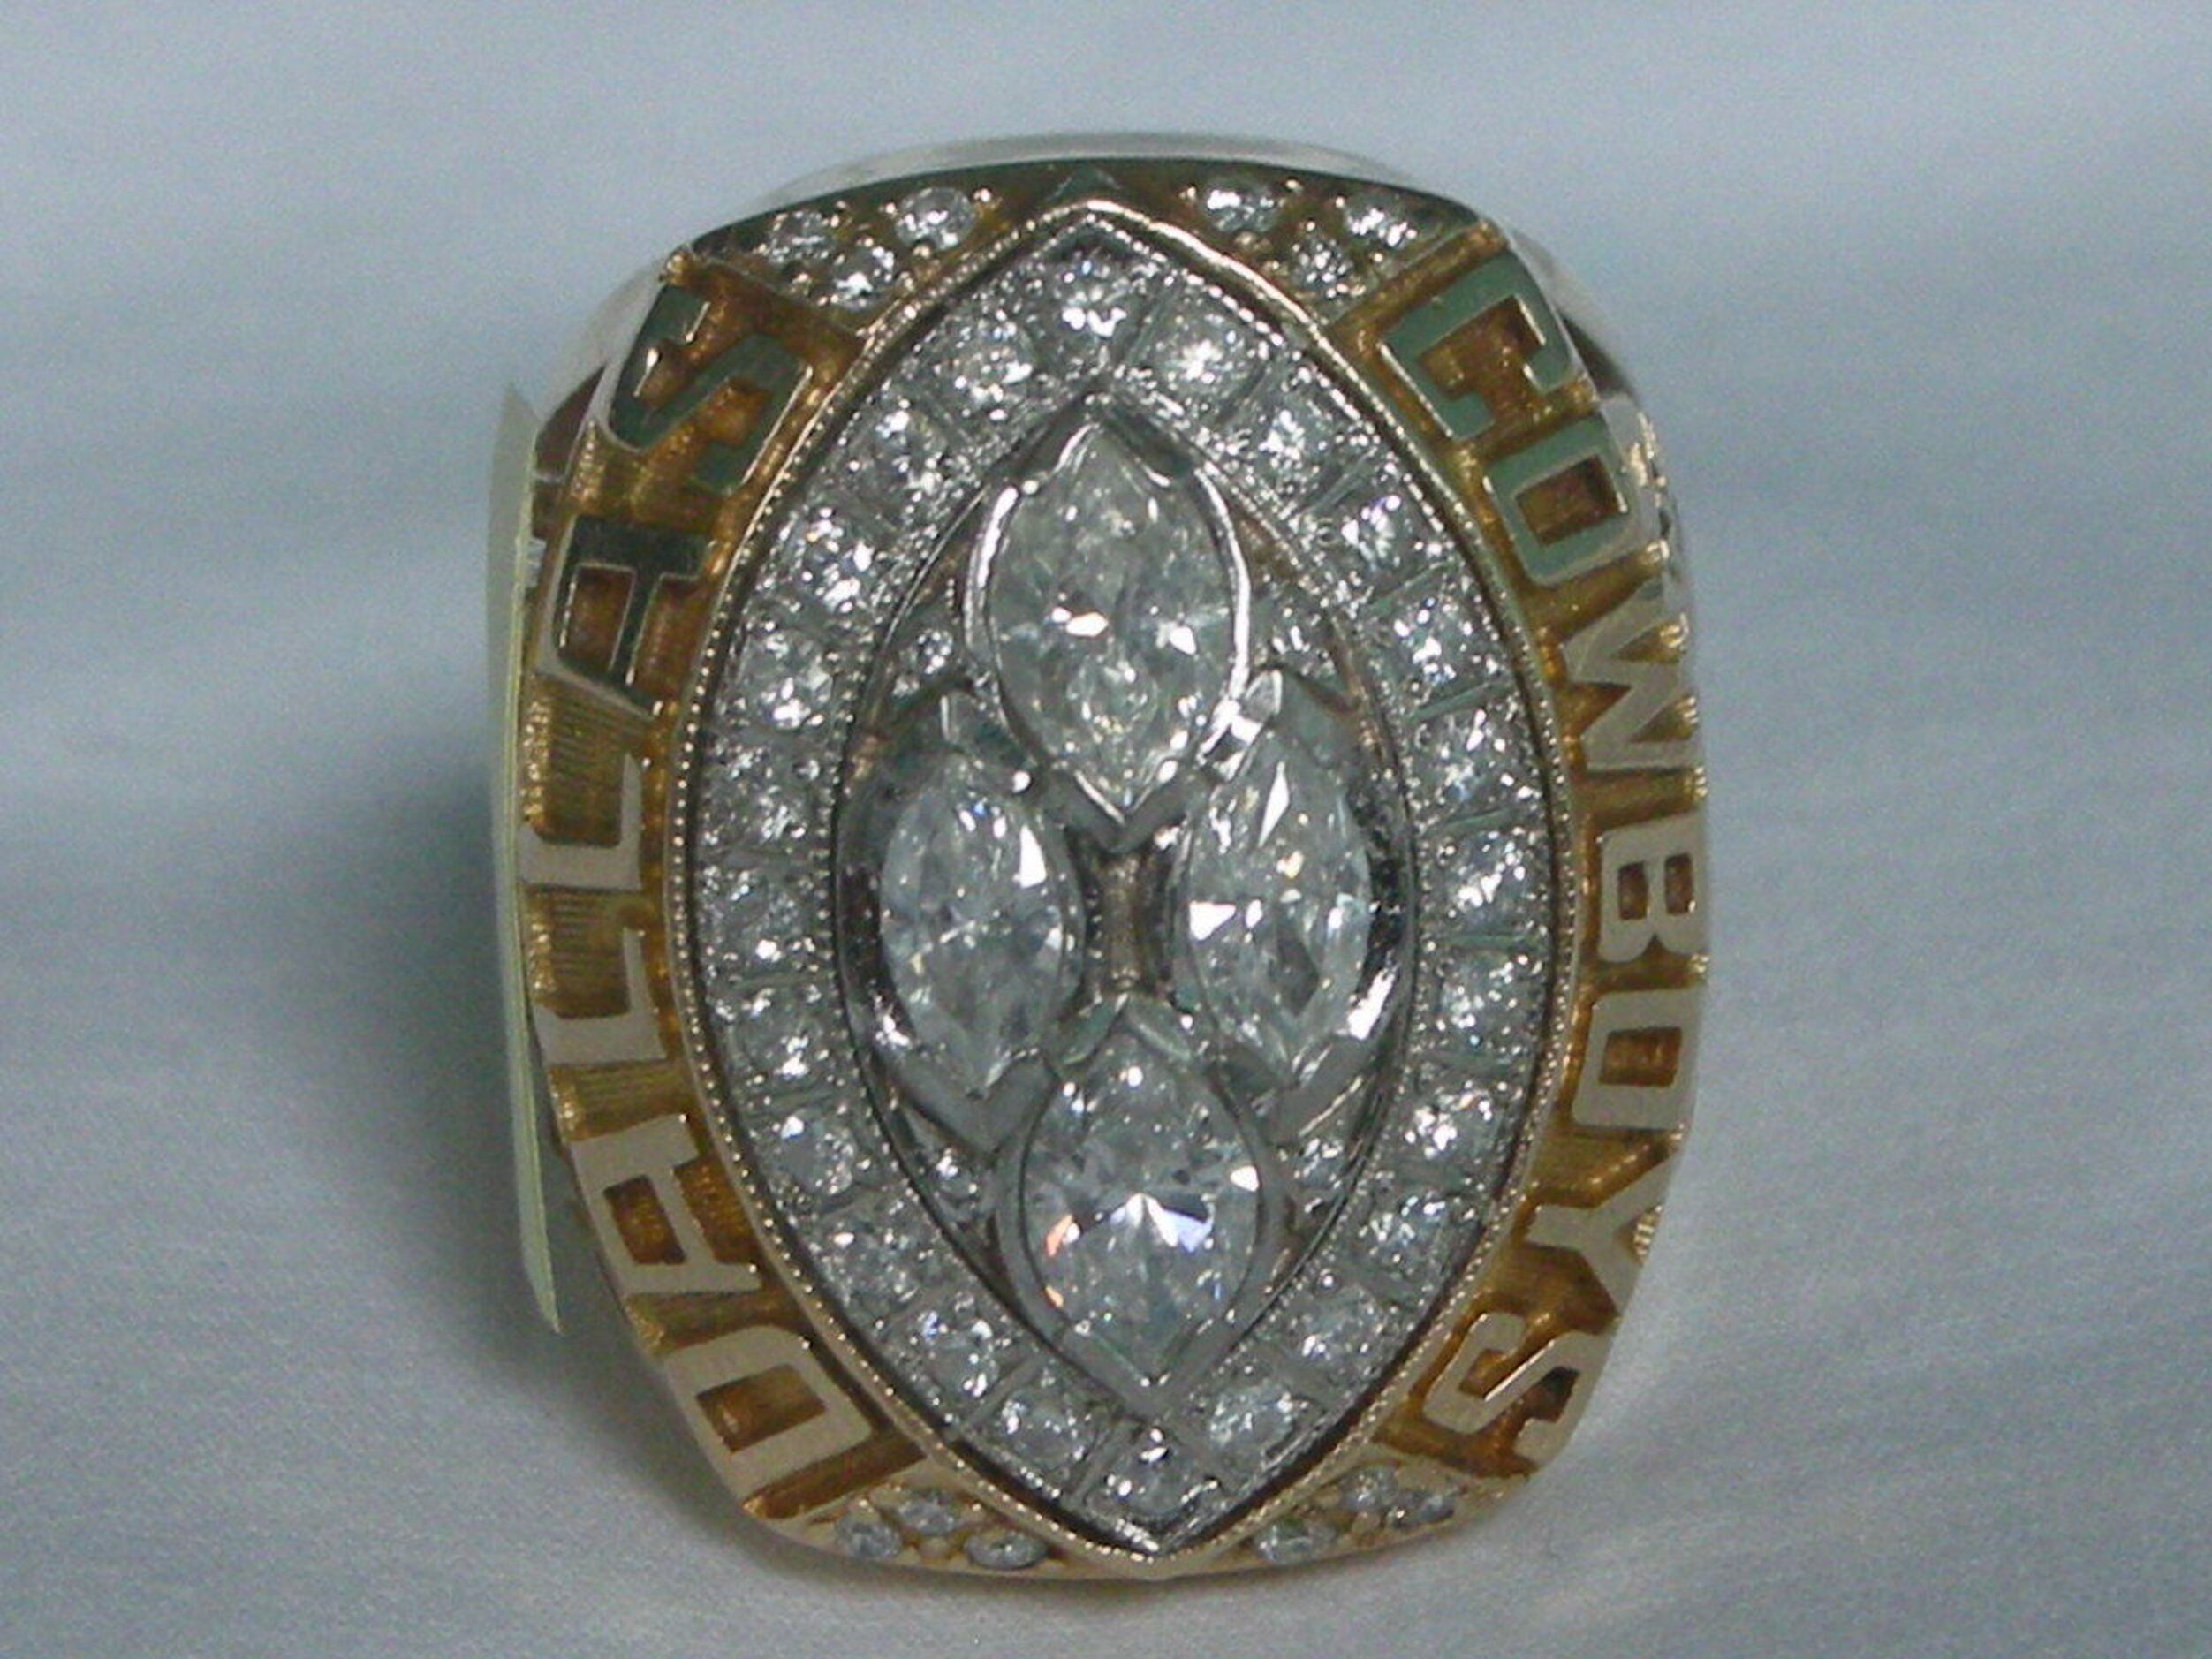 Dallas Cowboys 1995 Super Bowl Football Championship Ring